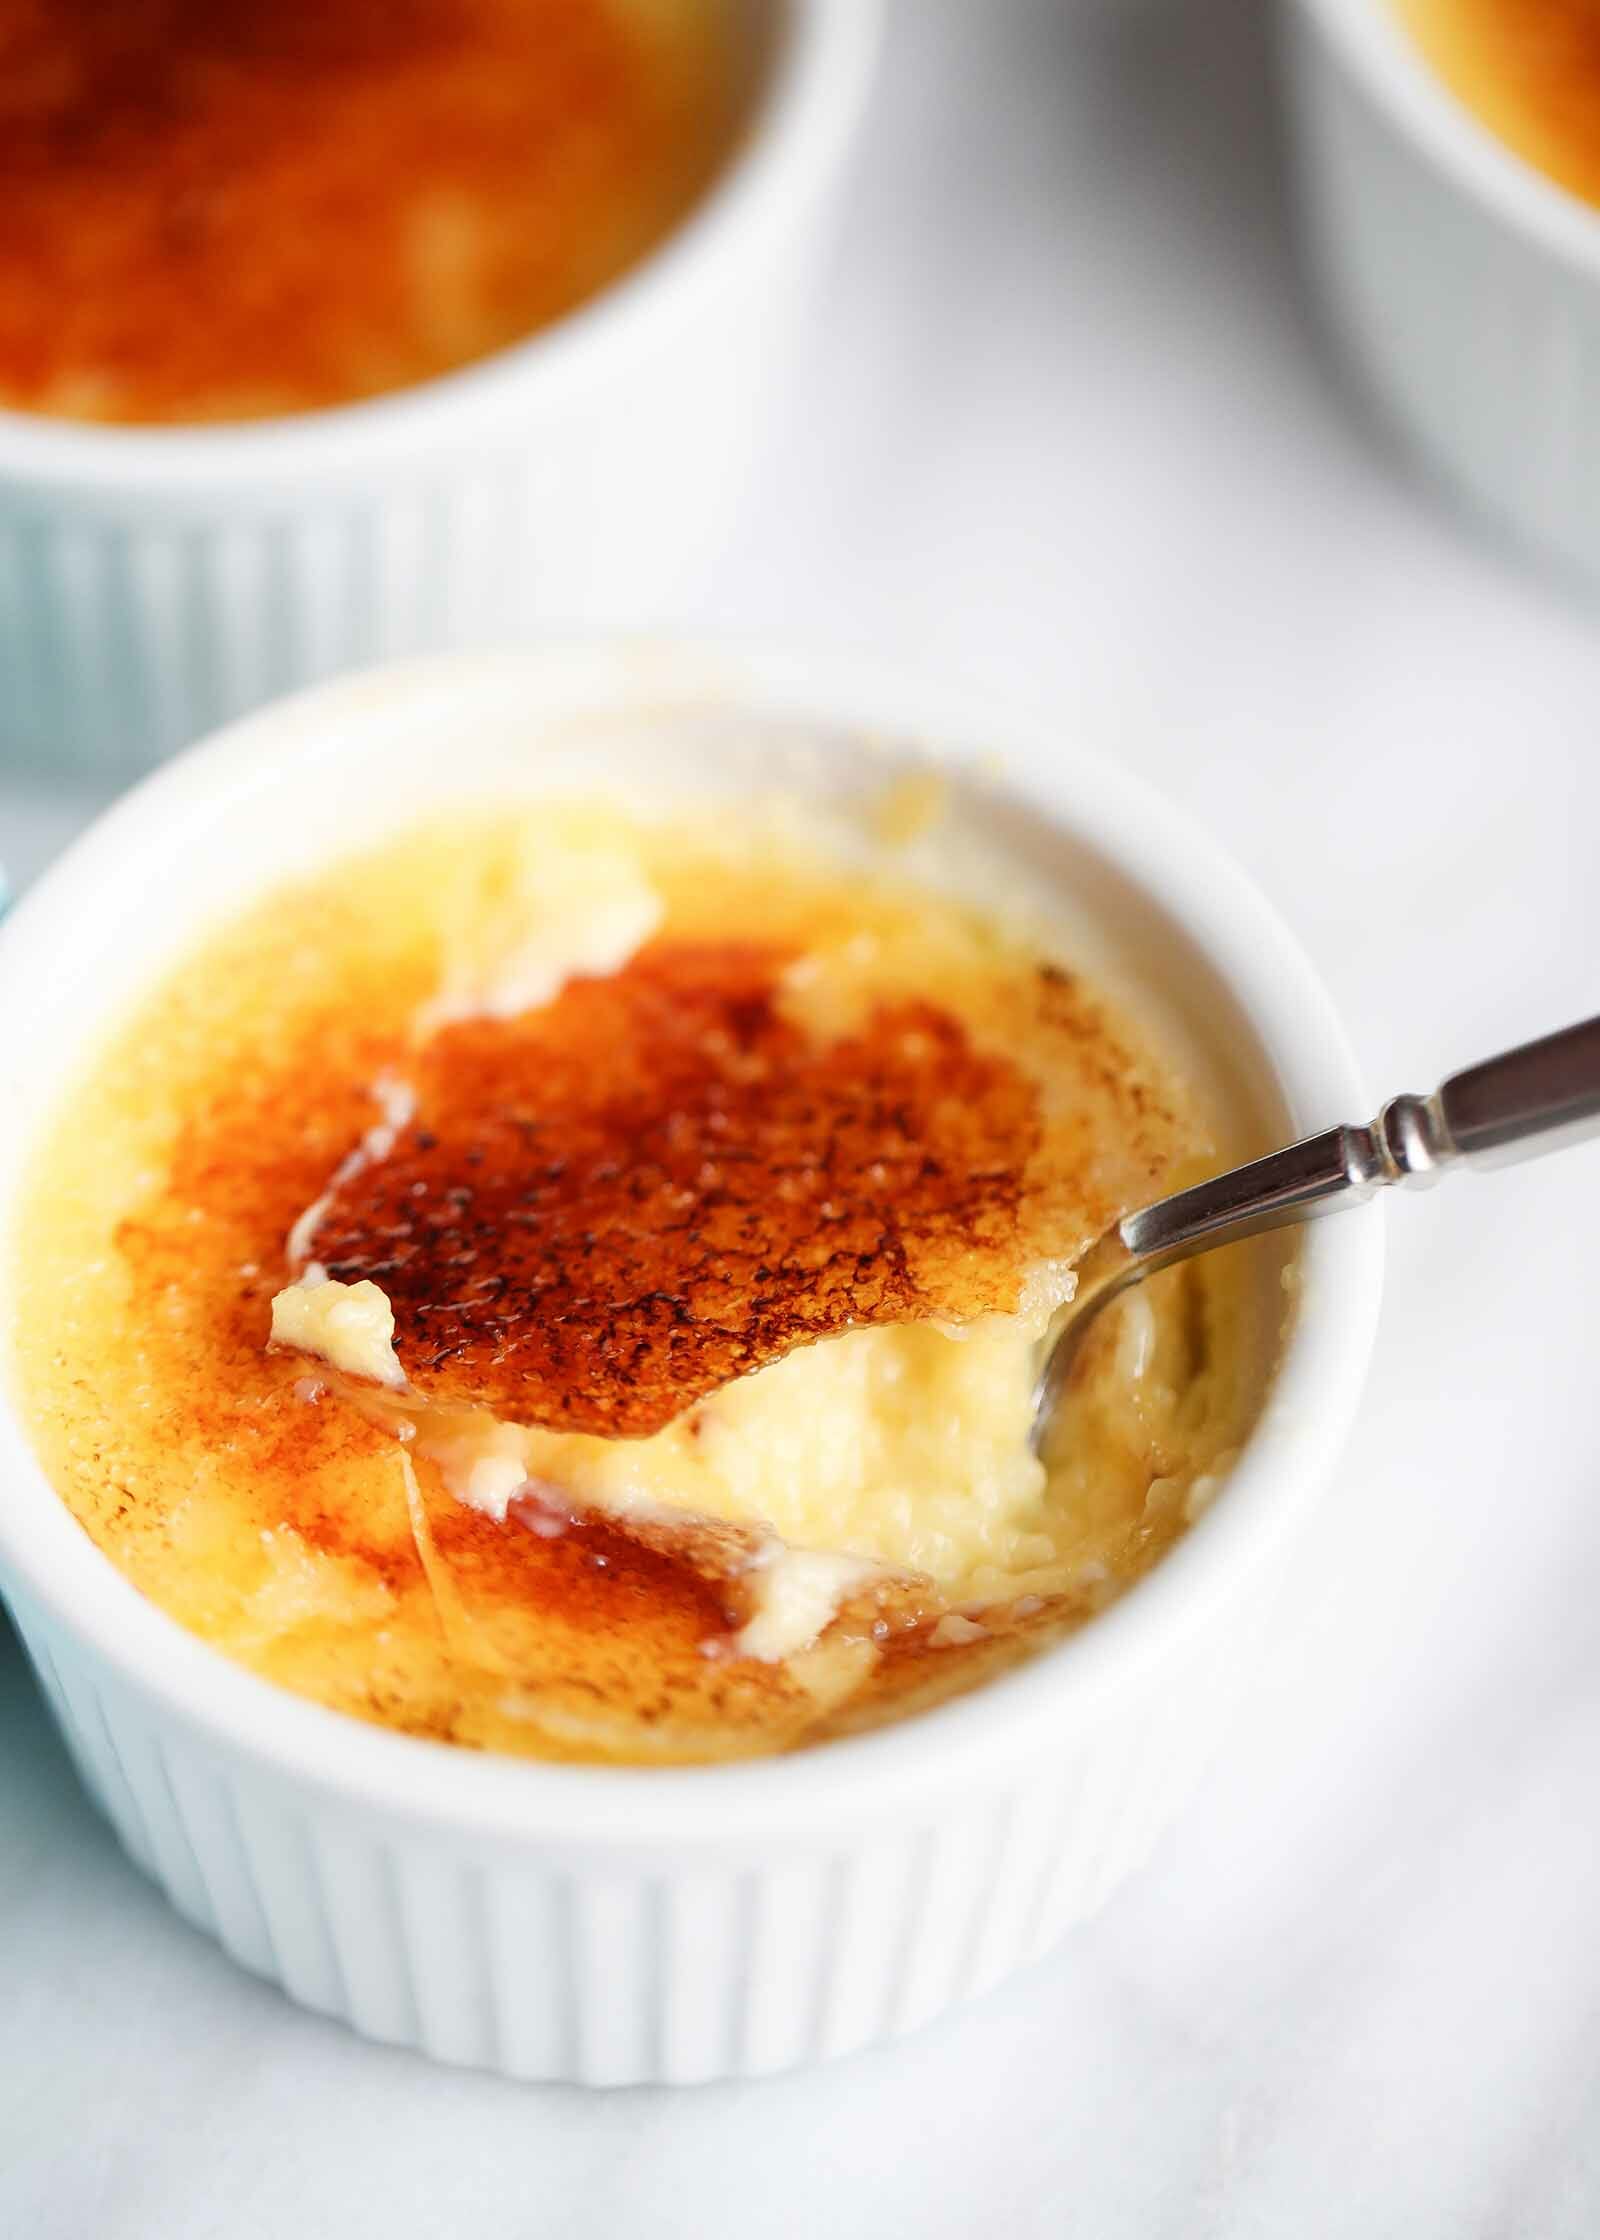 Crème brûlée - a master of ceremonies